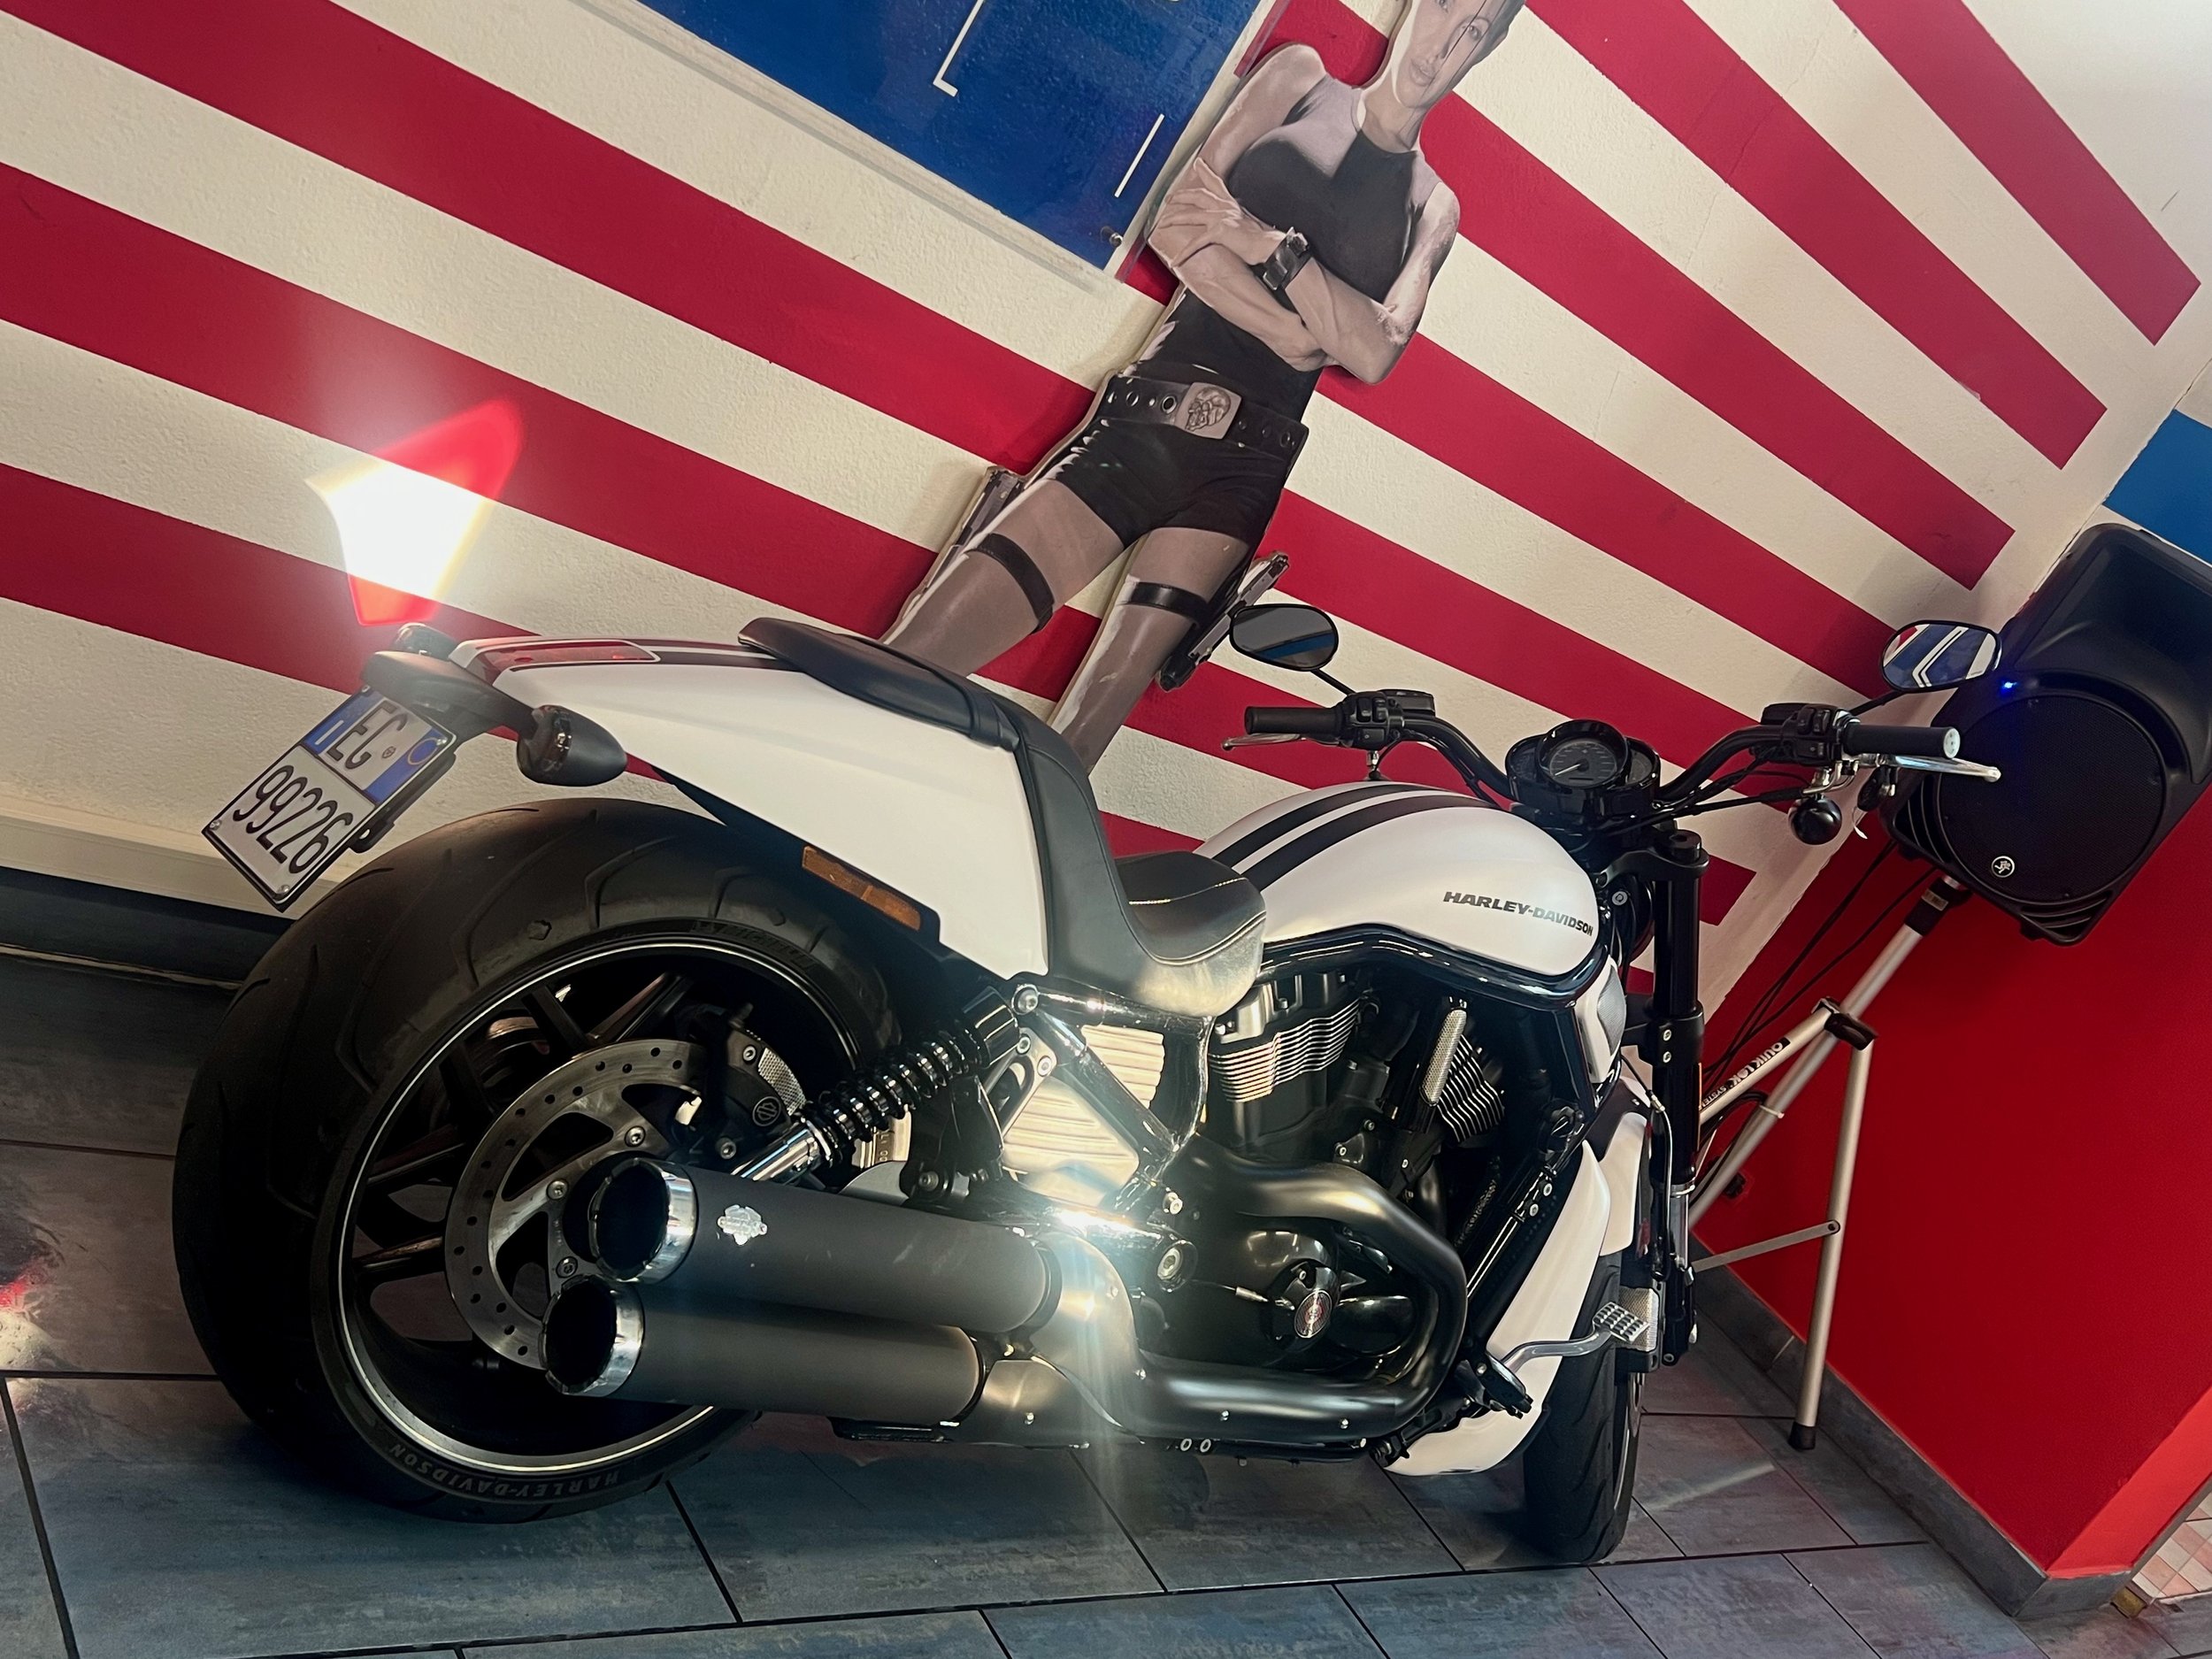 02 2016 Harley Davidson V-Rod Muscle Salt Lake Matt White.jpeg